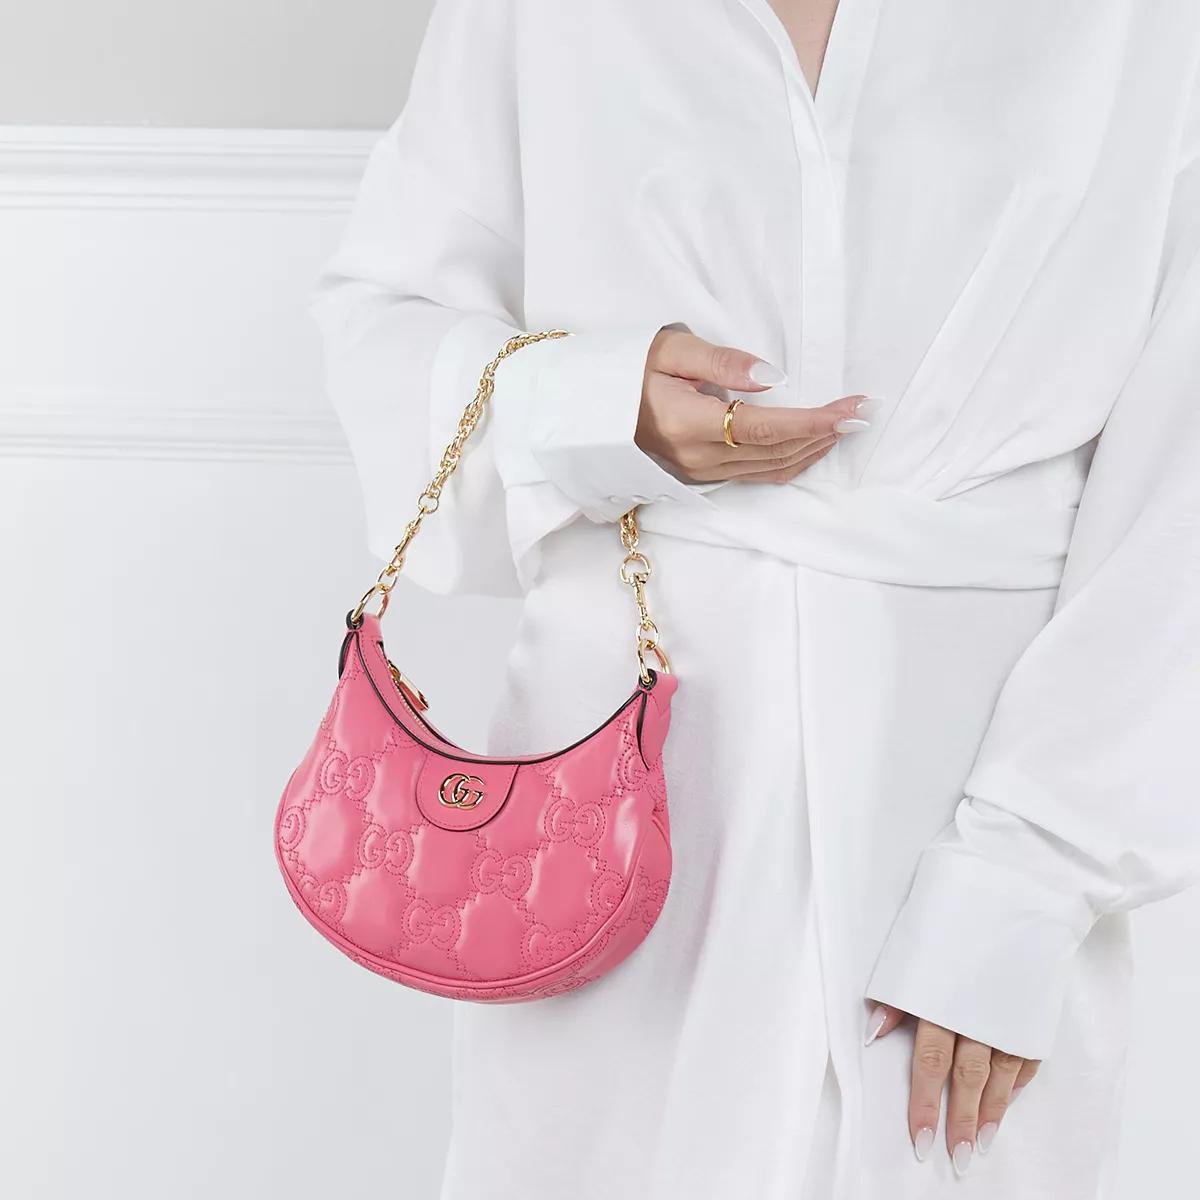 Gucci Mini GG Shoulder Bag Matelassé Leather Rhodamine Pink, Hobo Bag